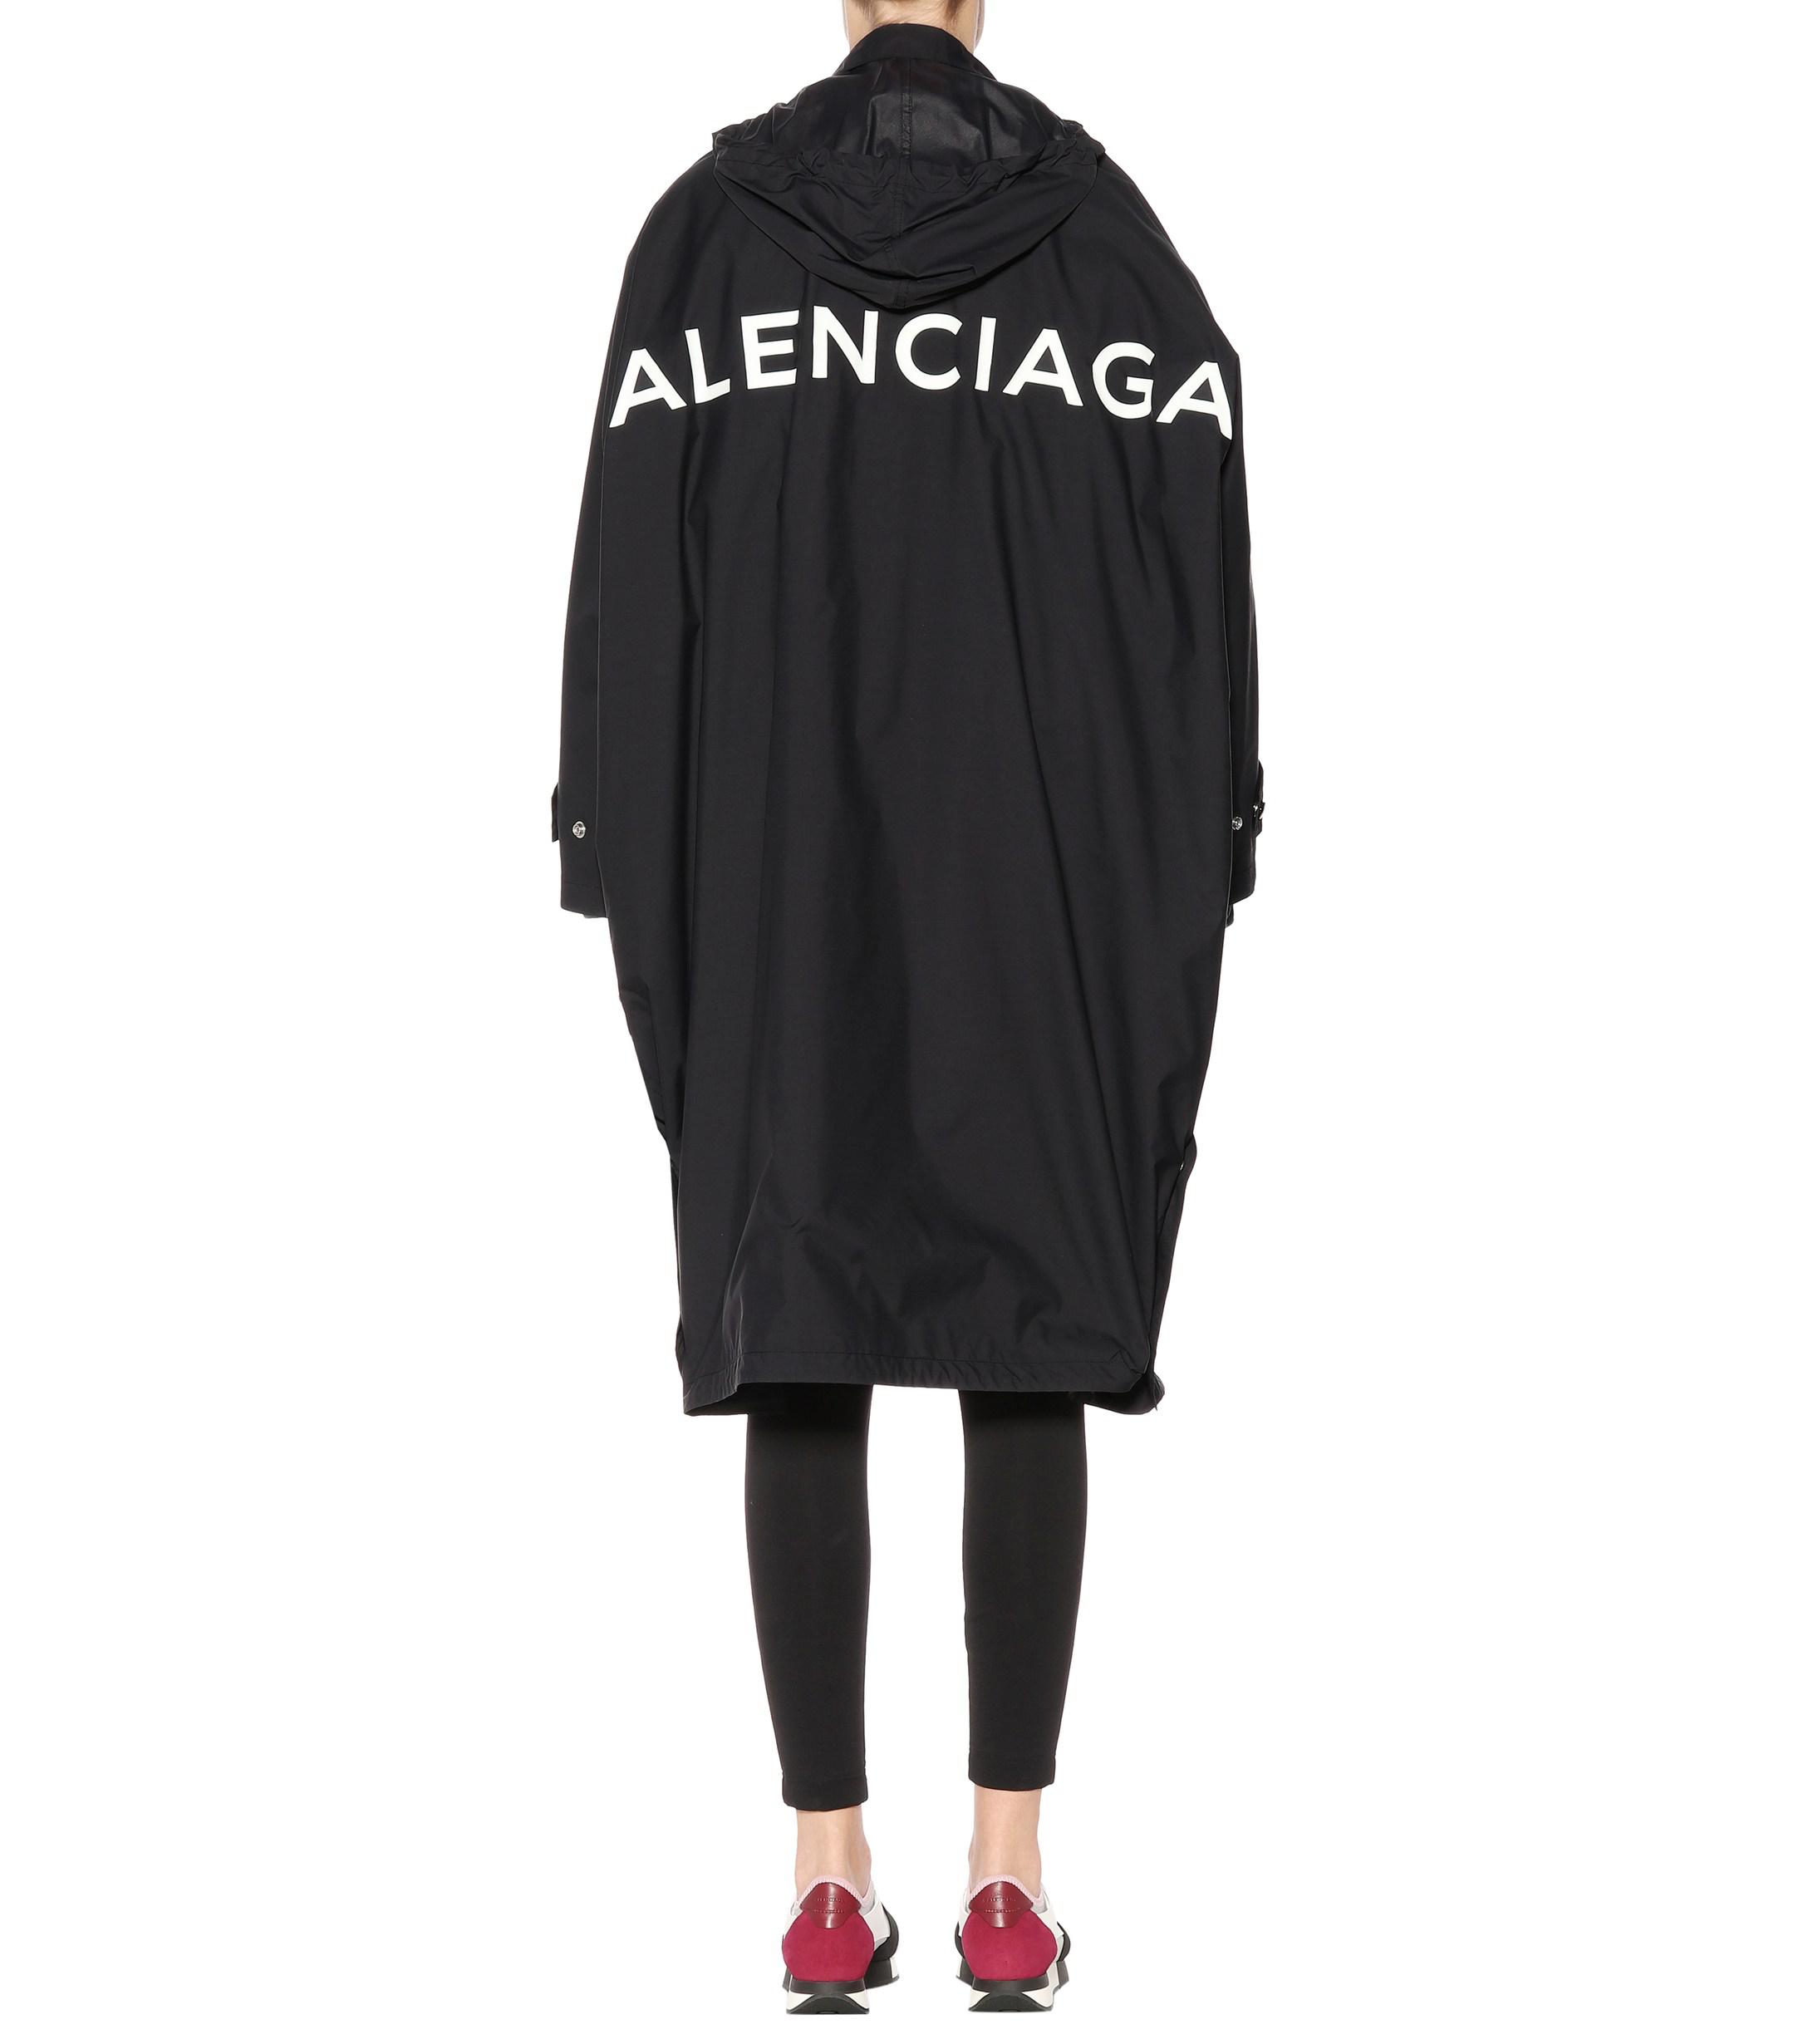 Balenciaga Oversized Raincoat in Black | Lyst